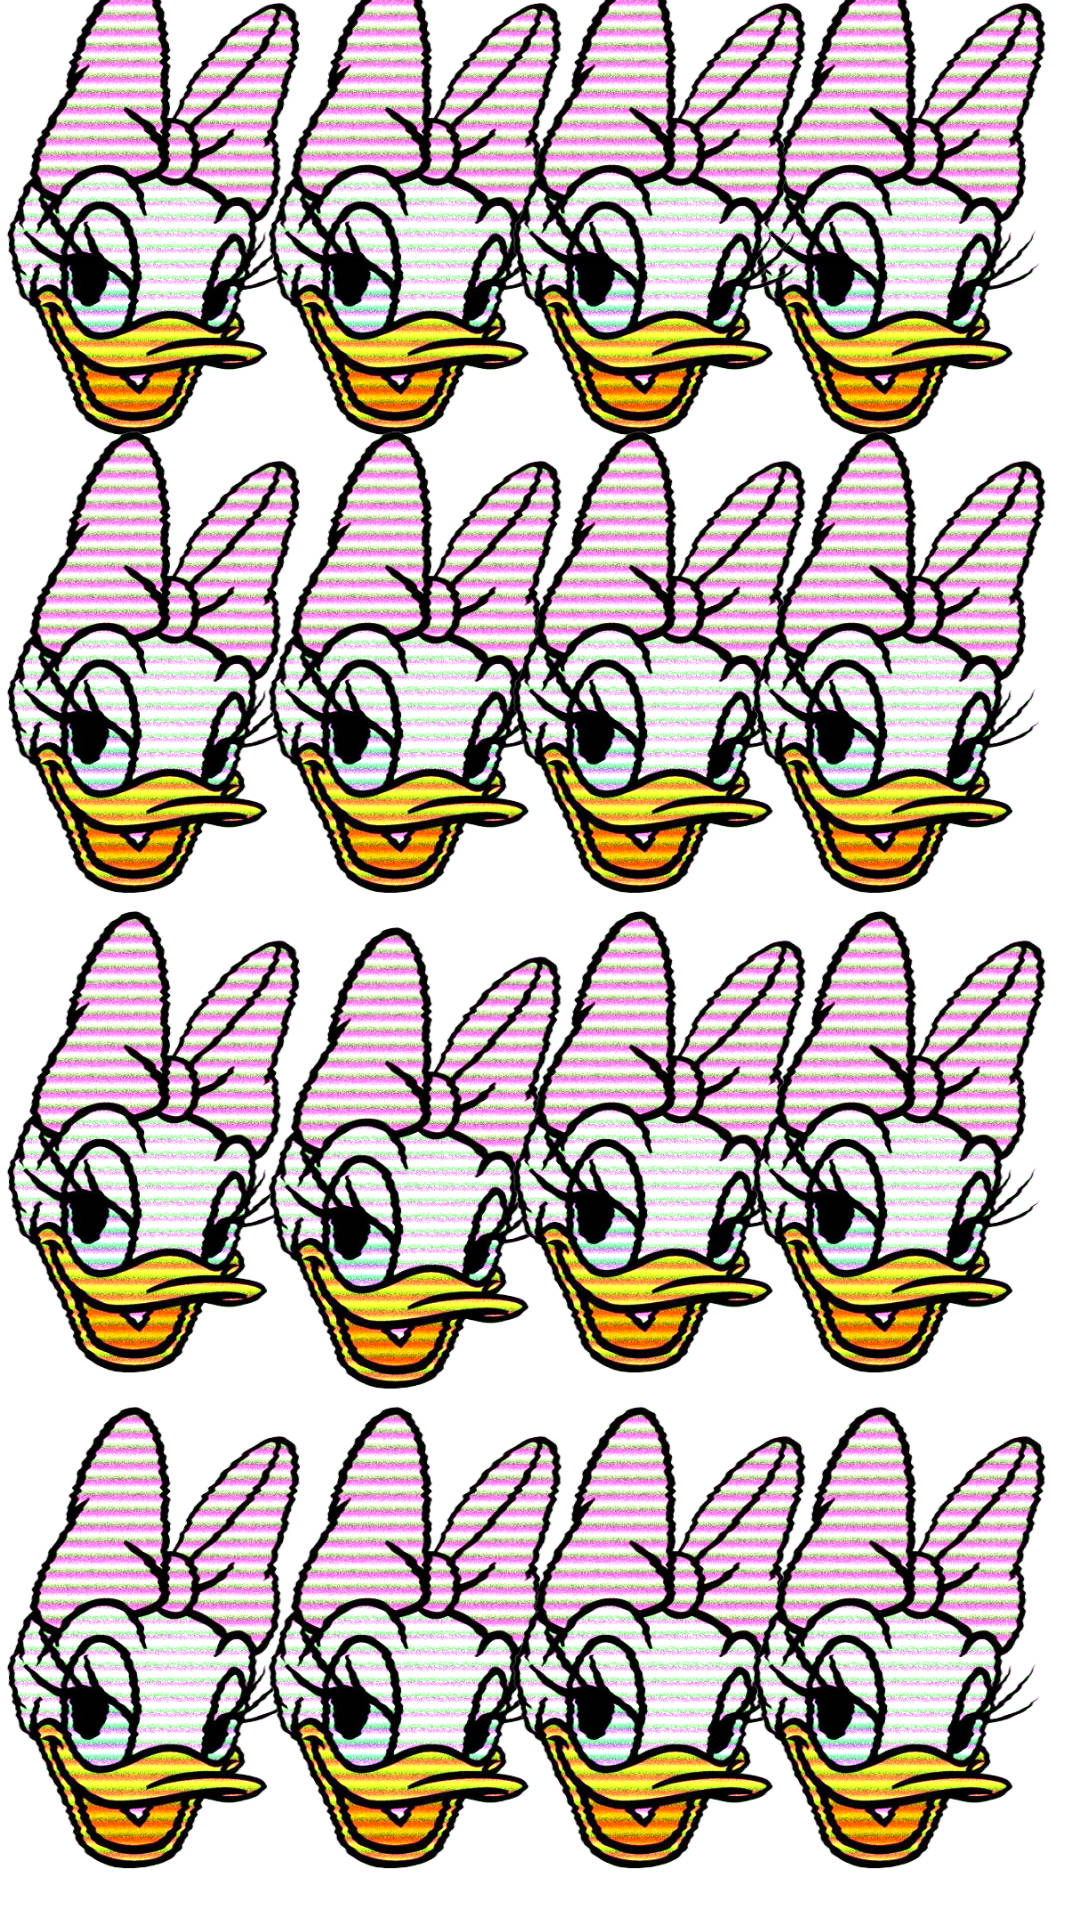 Retro Daisy Duck Heads Wallpaper